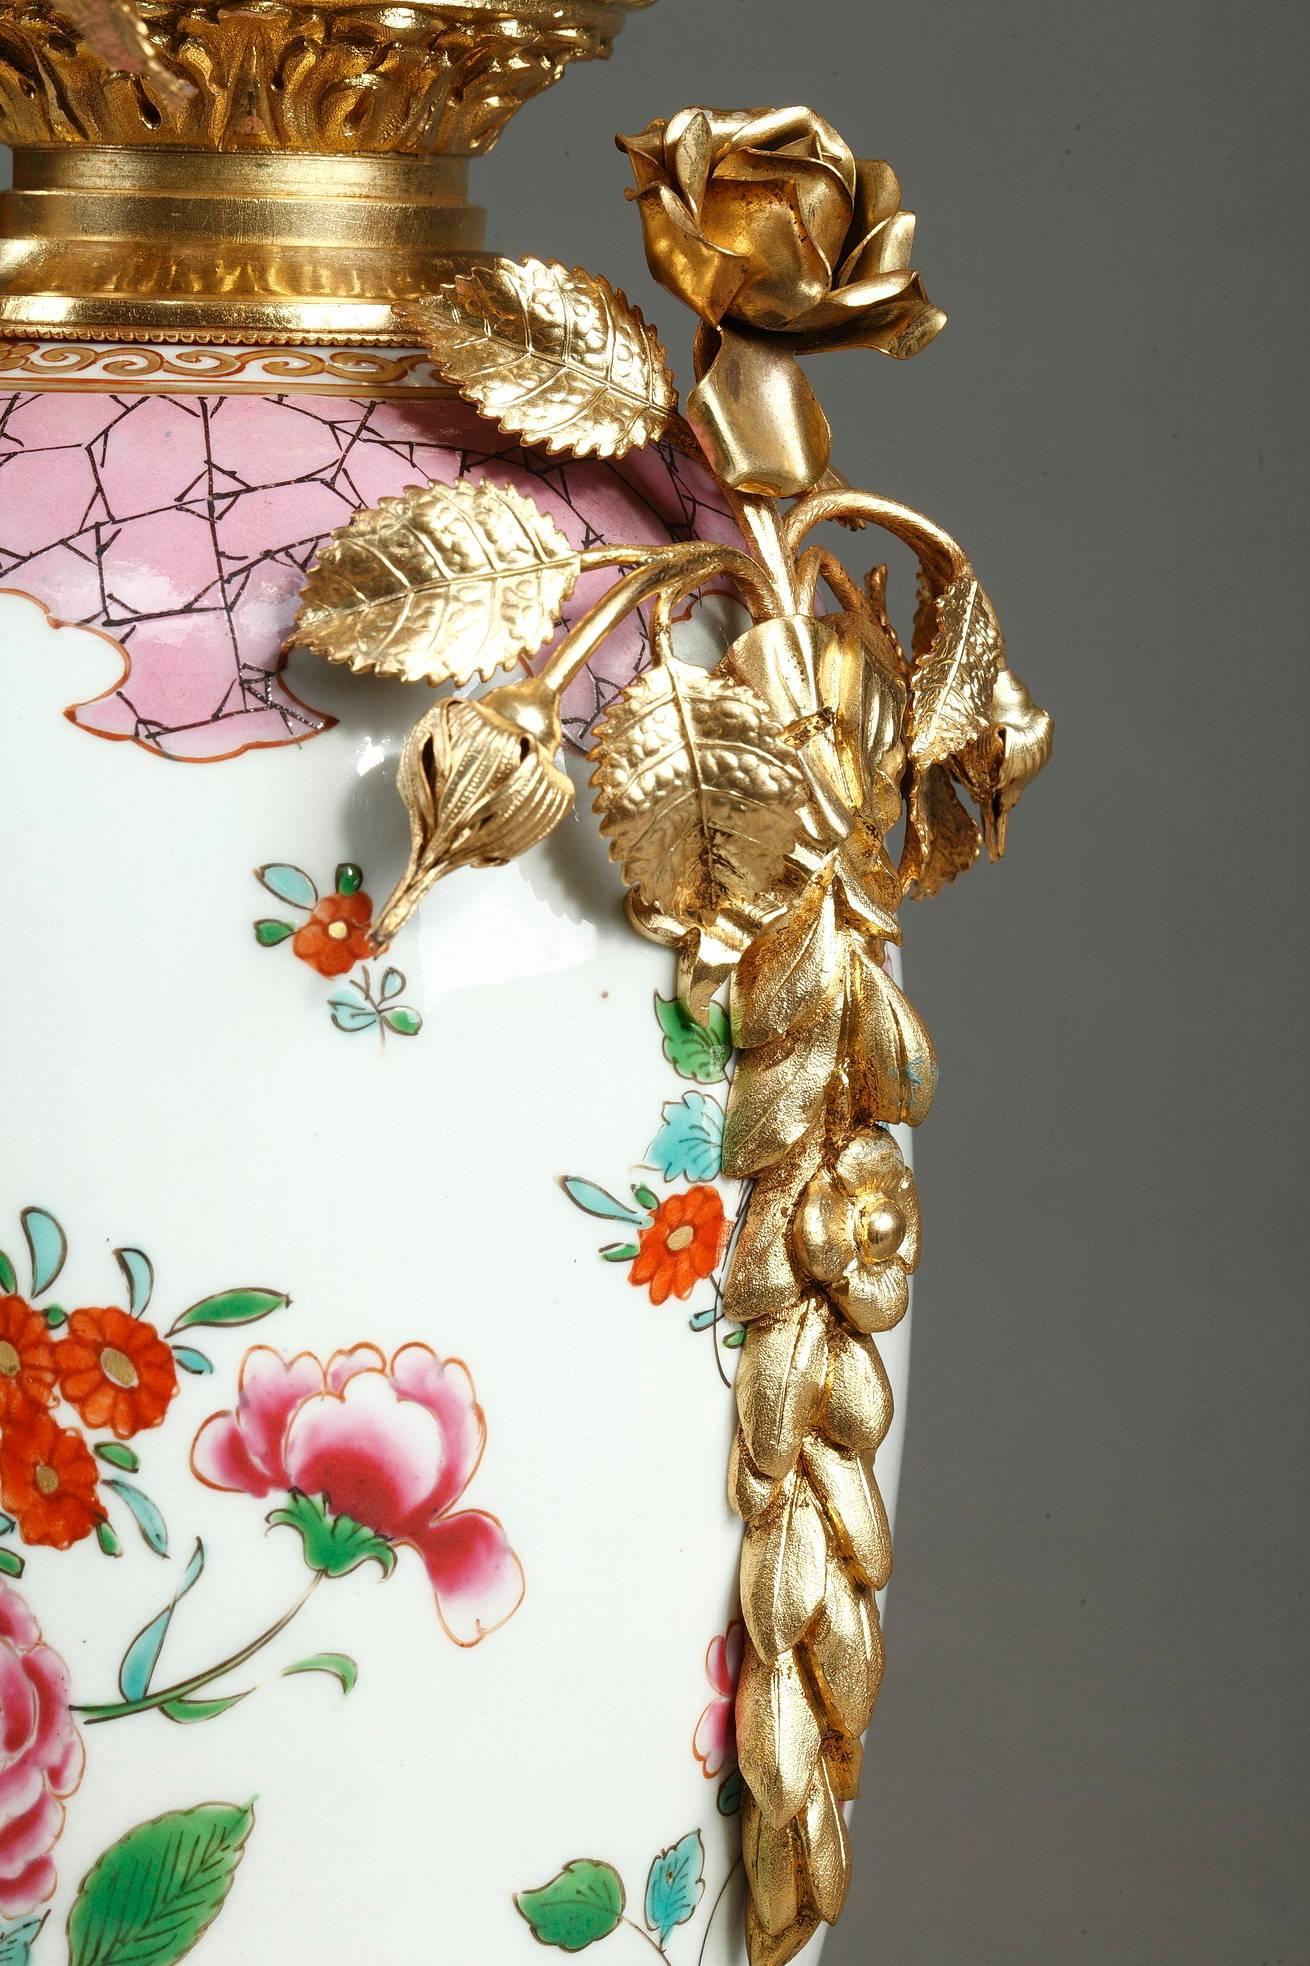 Late 19th Century Antique Lamps in Famille Rose Chinese Porcelain Taste (19. Jahrhundert)